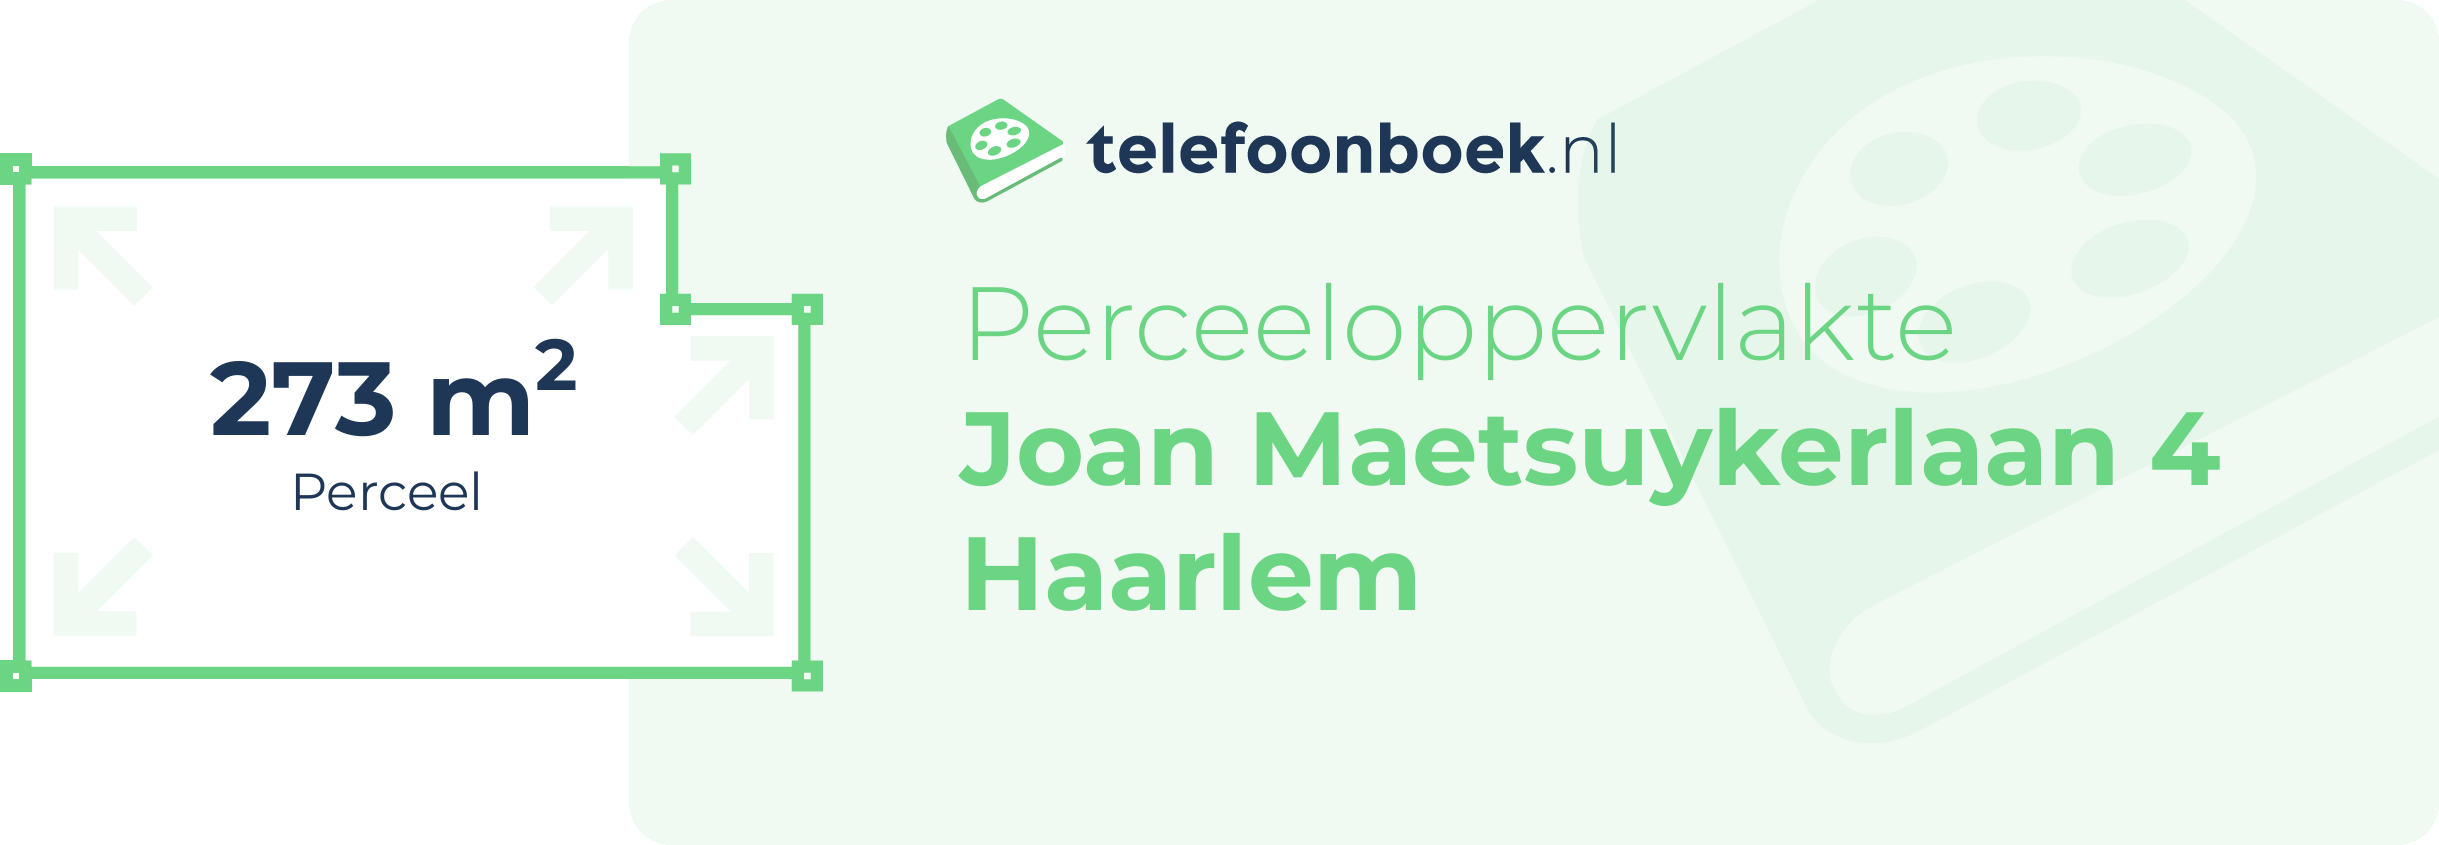 Perceeloppervlakte Joan Maetsuykerlaan 4 Haarlem